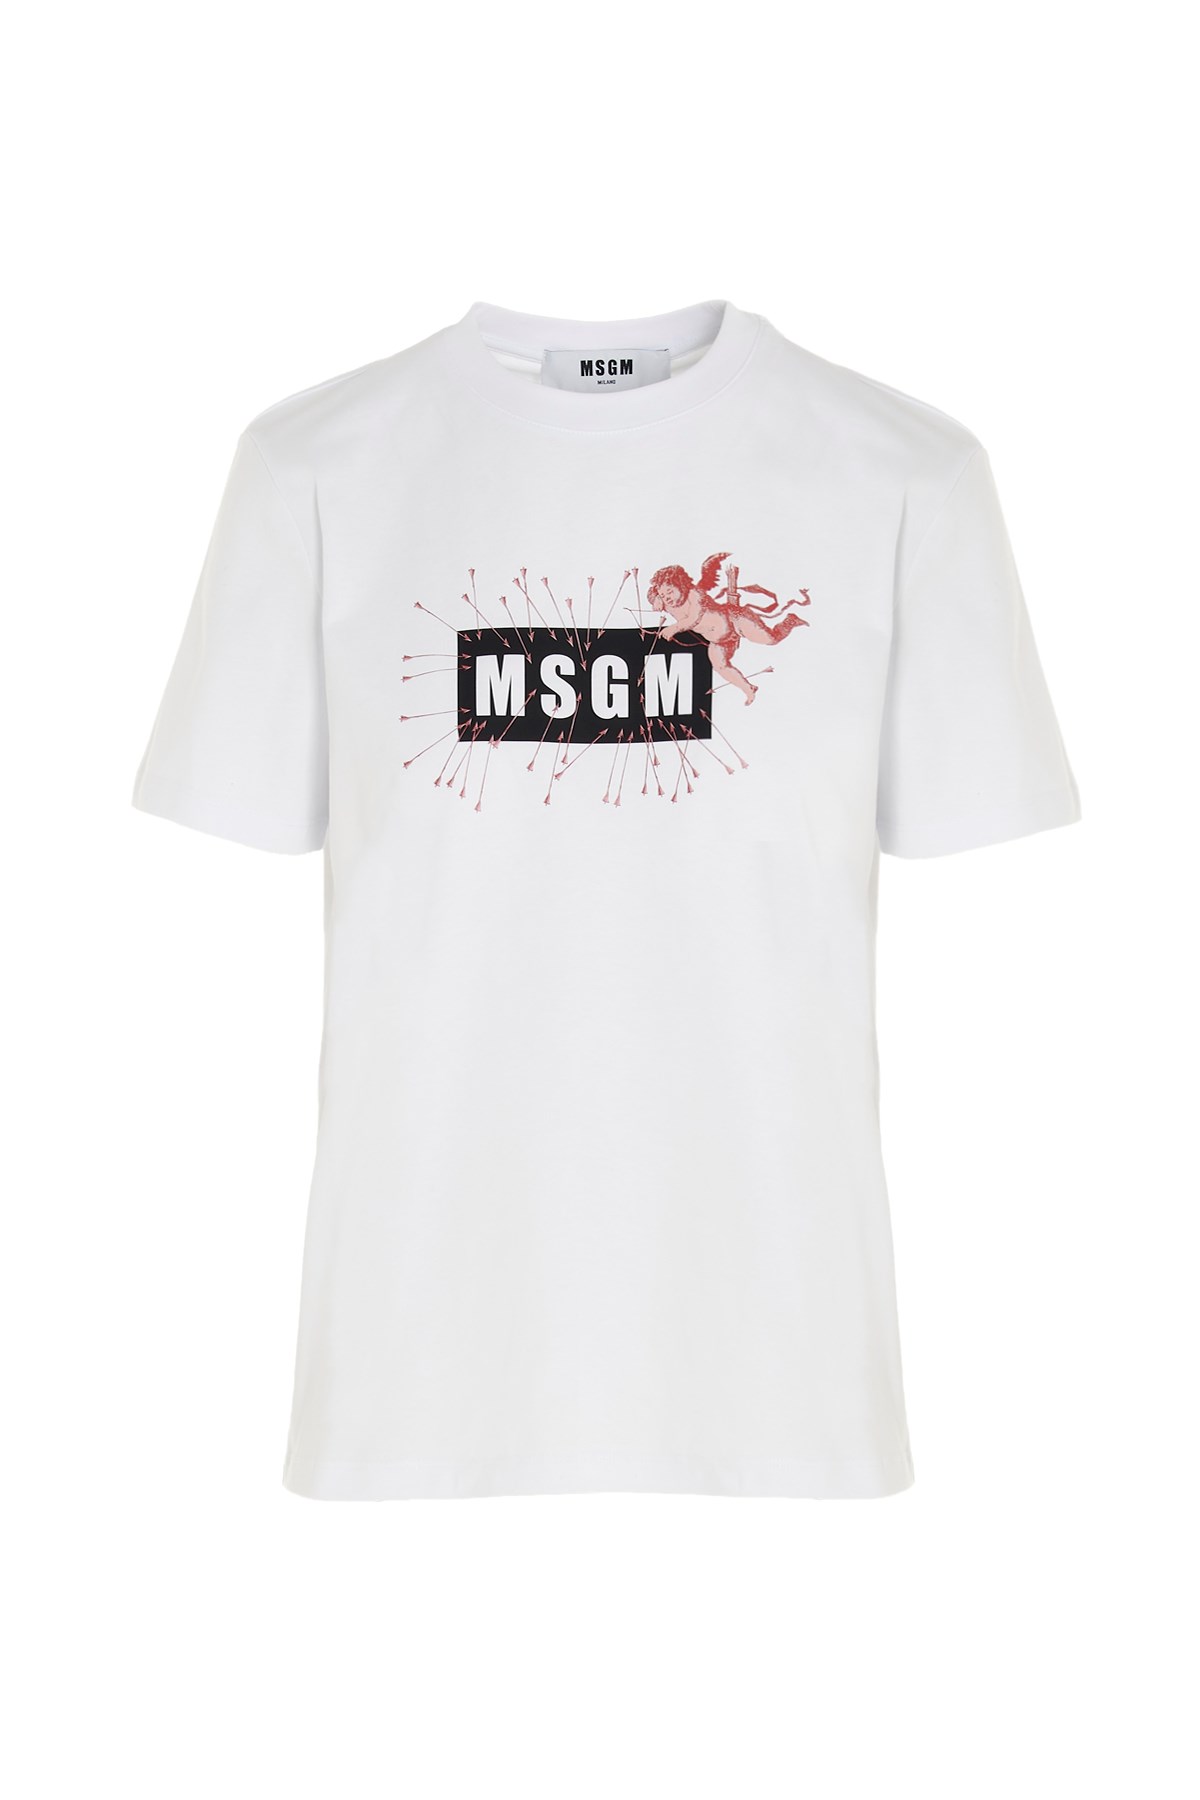 MSGM Logo Print T-Shirt